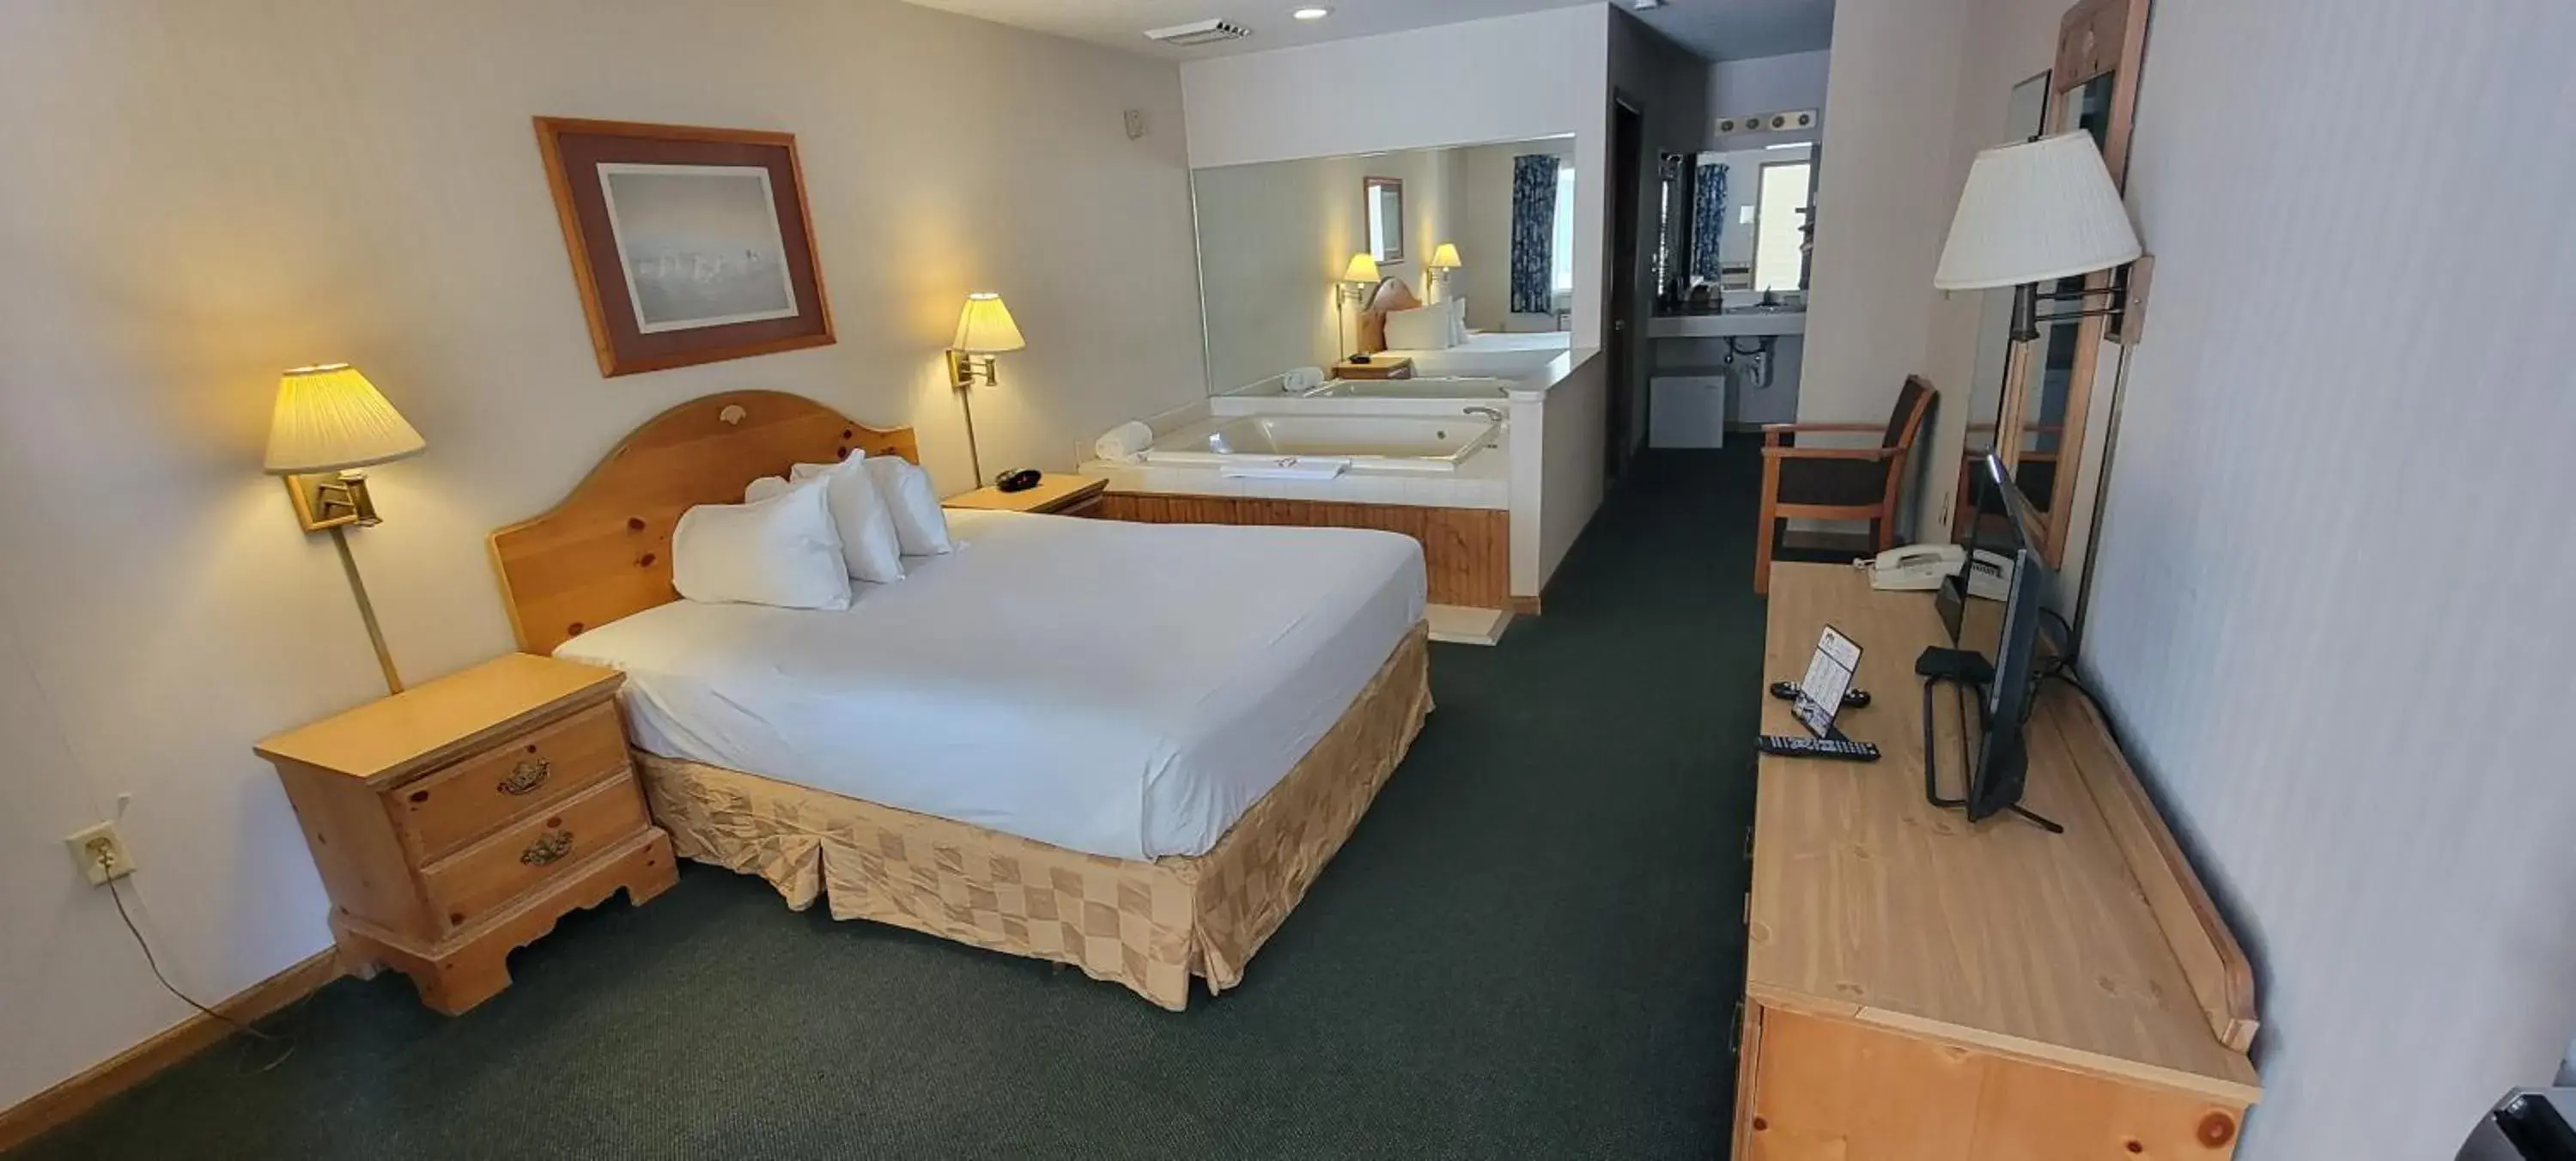 Queen Room with Spa Bath in Thunderbird Inn of Mackinaw City